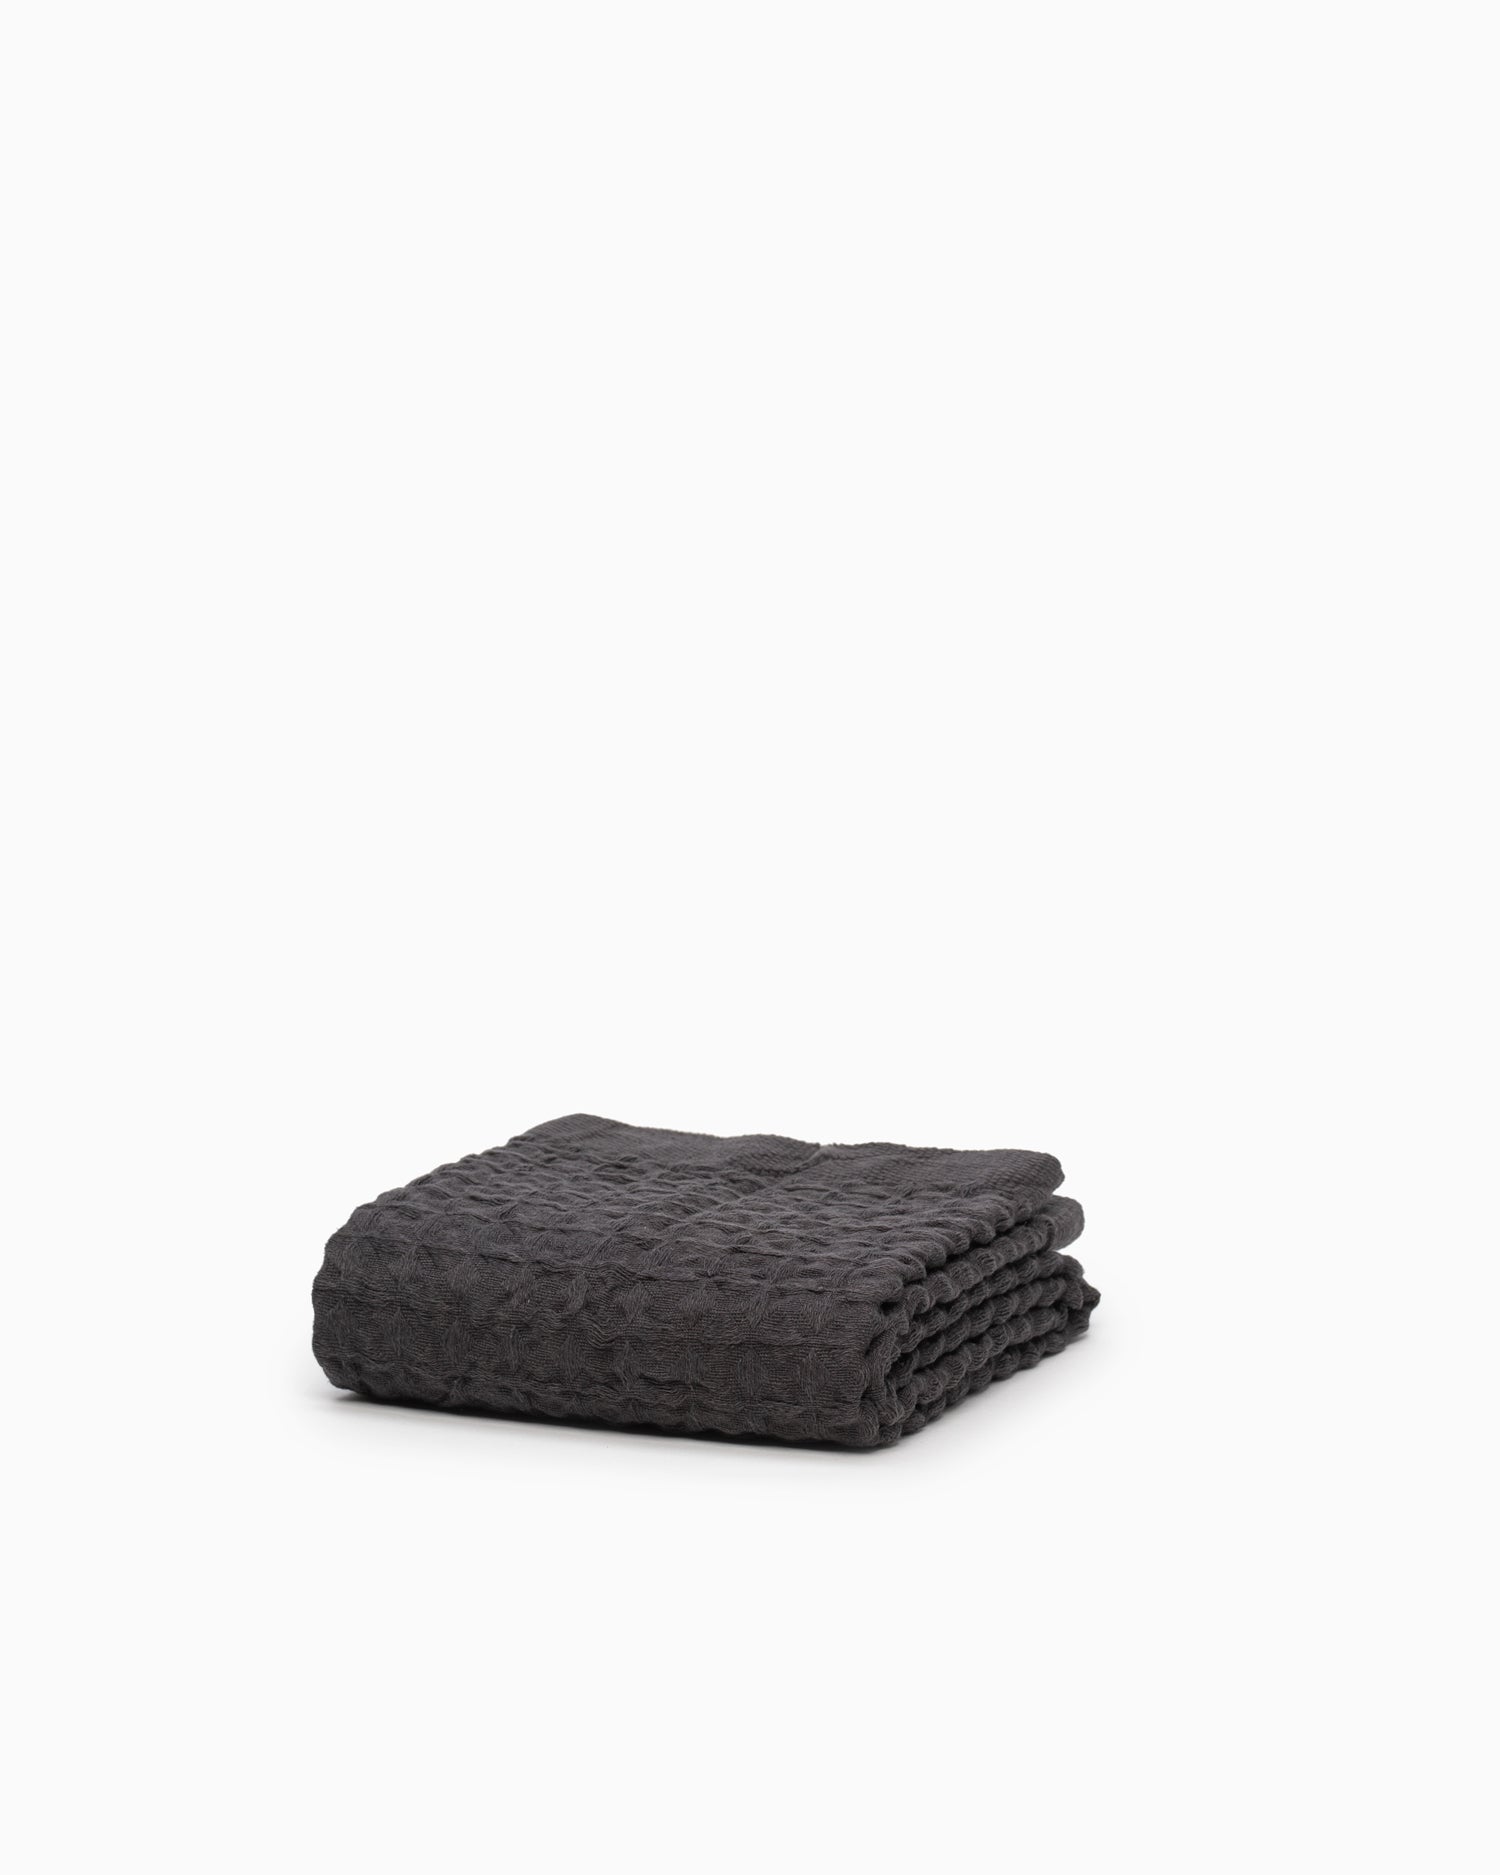 Lattice Linen Hand Towel - Charcoal